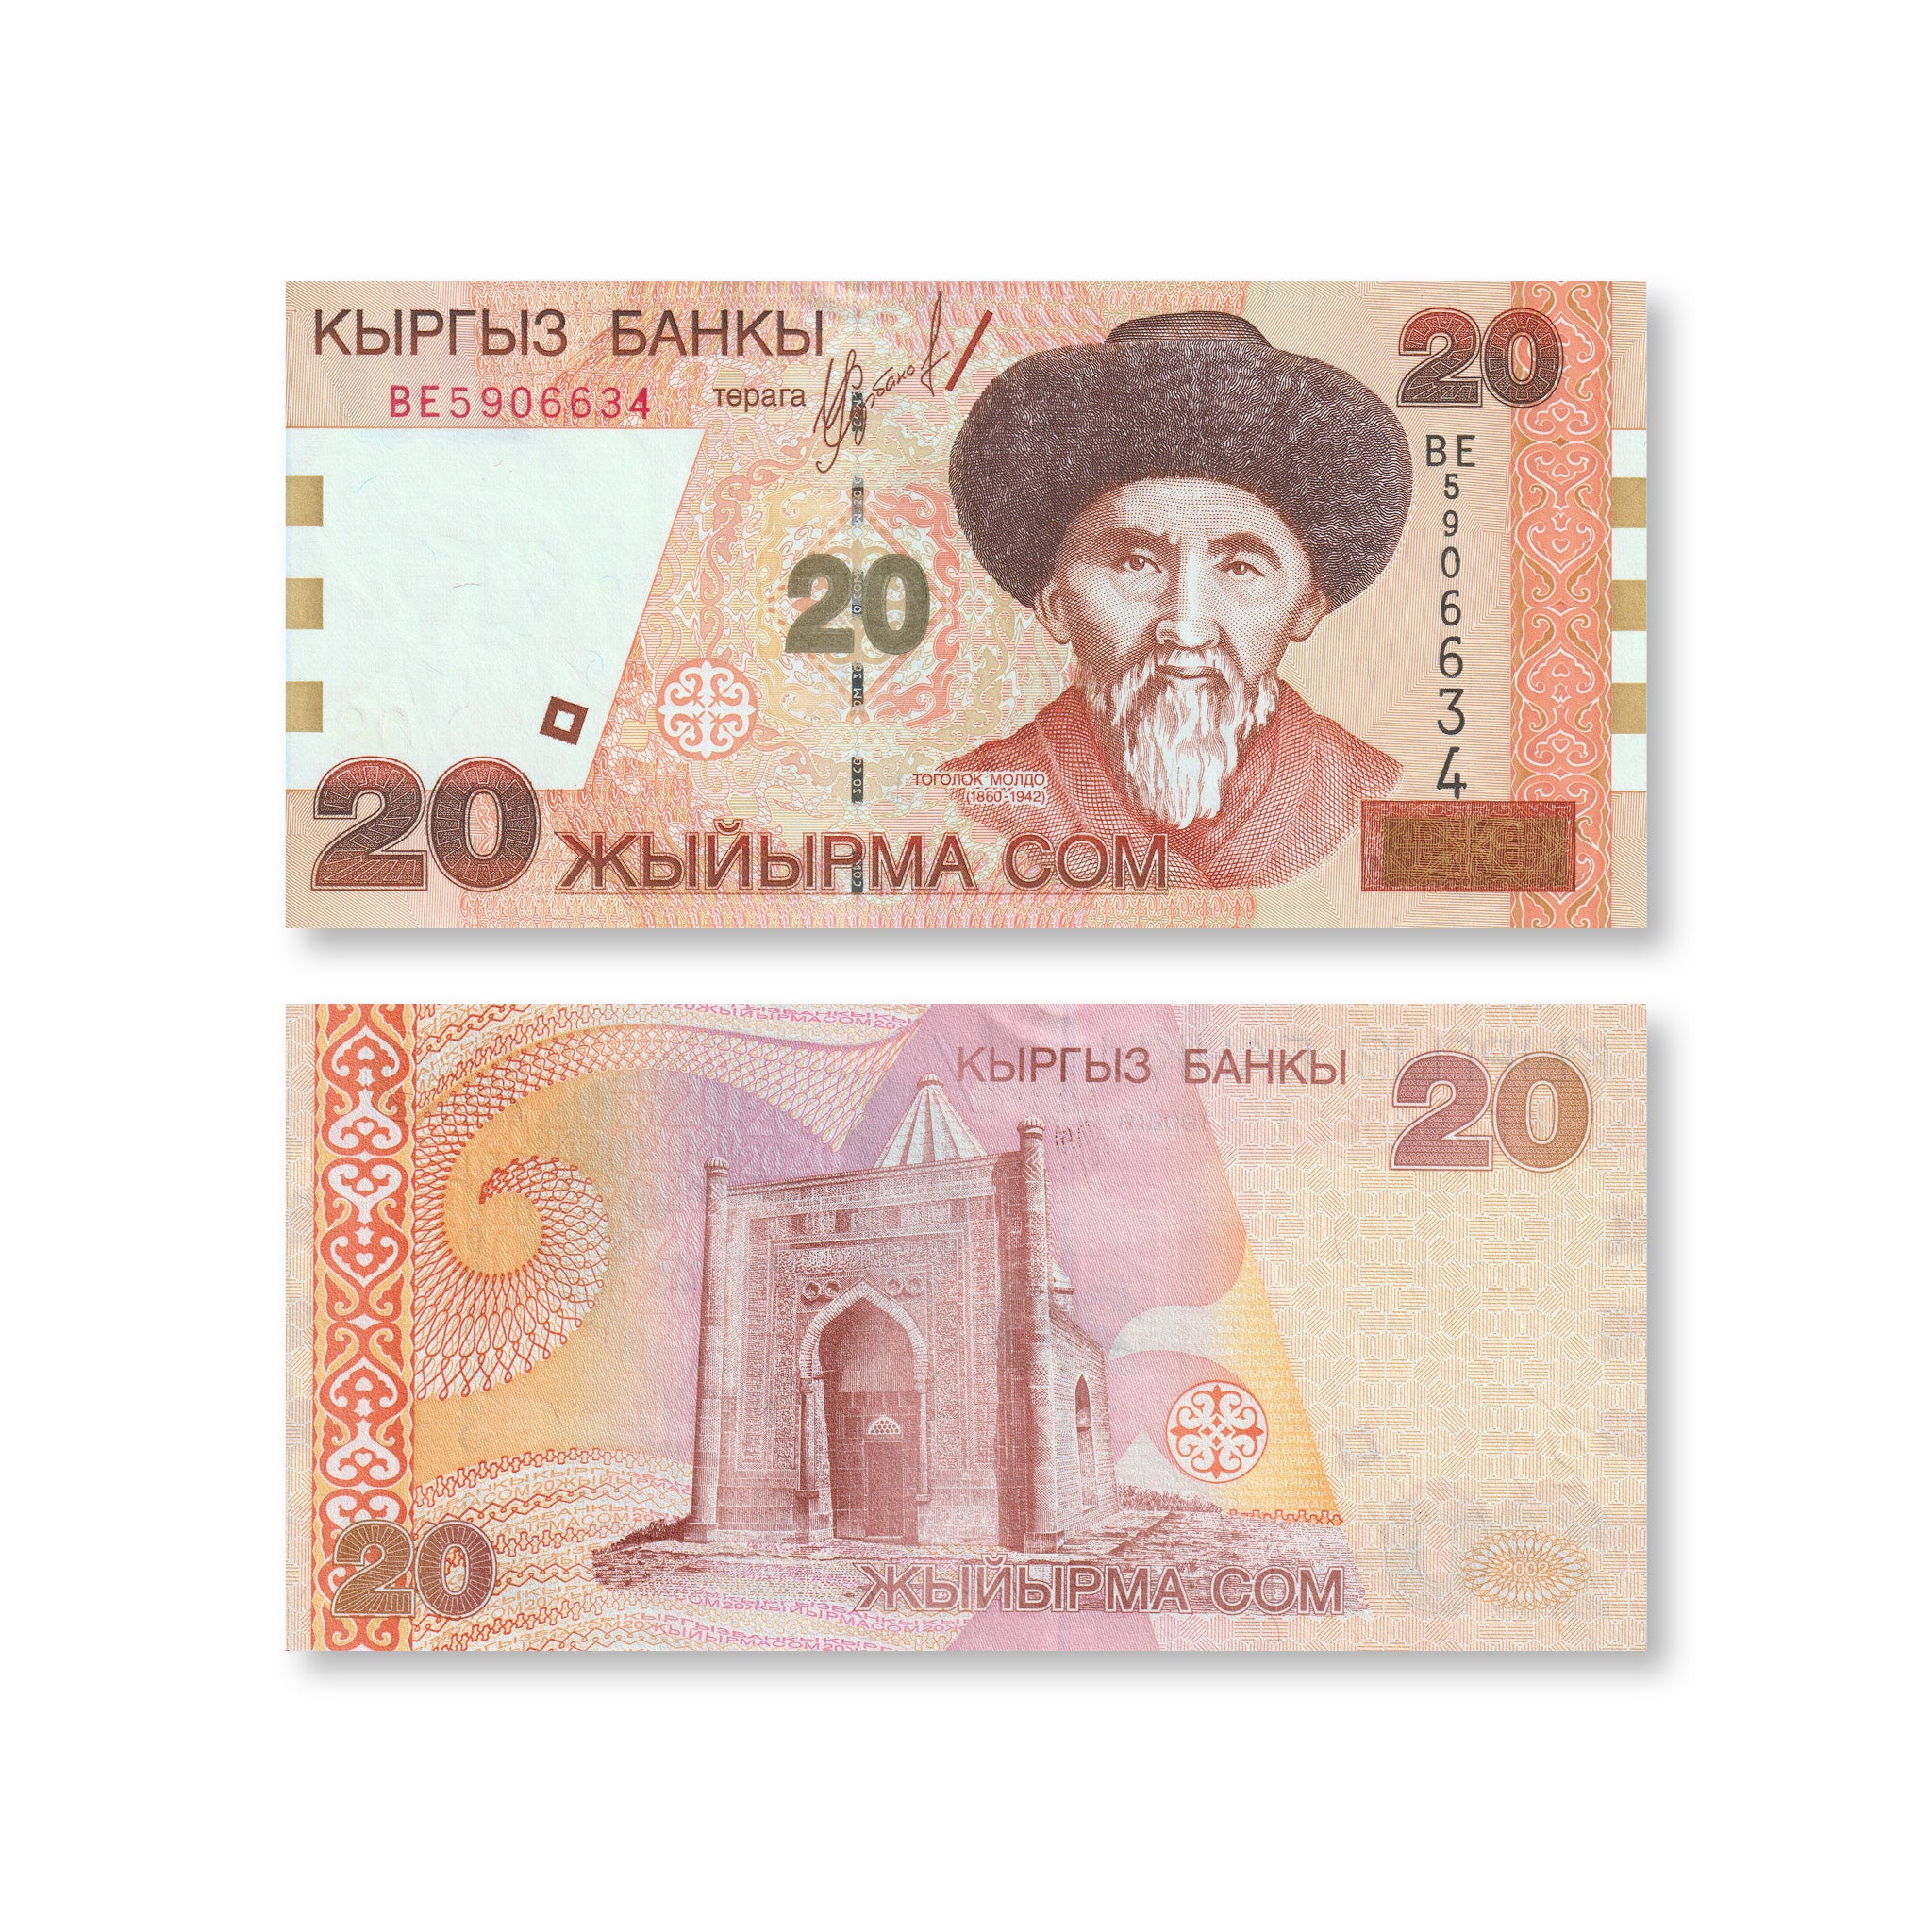 Kyrgyzstan 20 Som, 2002, B213a, P19, UNC - Robert's World Money - World Banknotes